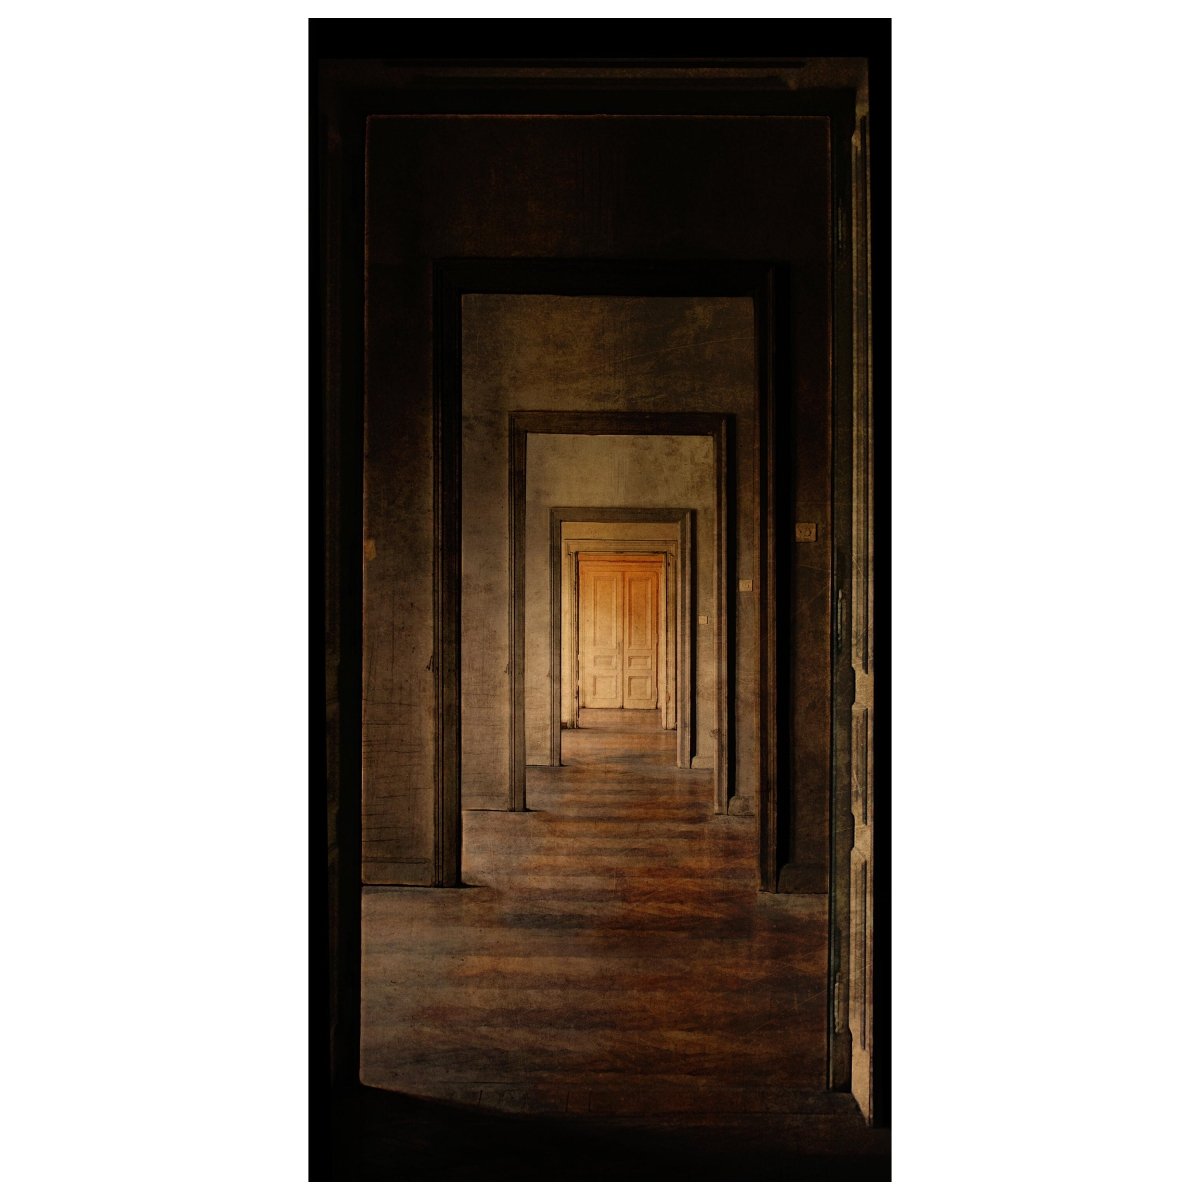 Türtapete Türen Flur, Holz, Tür, Rustikal, Parkett M1073 - Bild 2